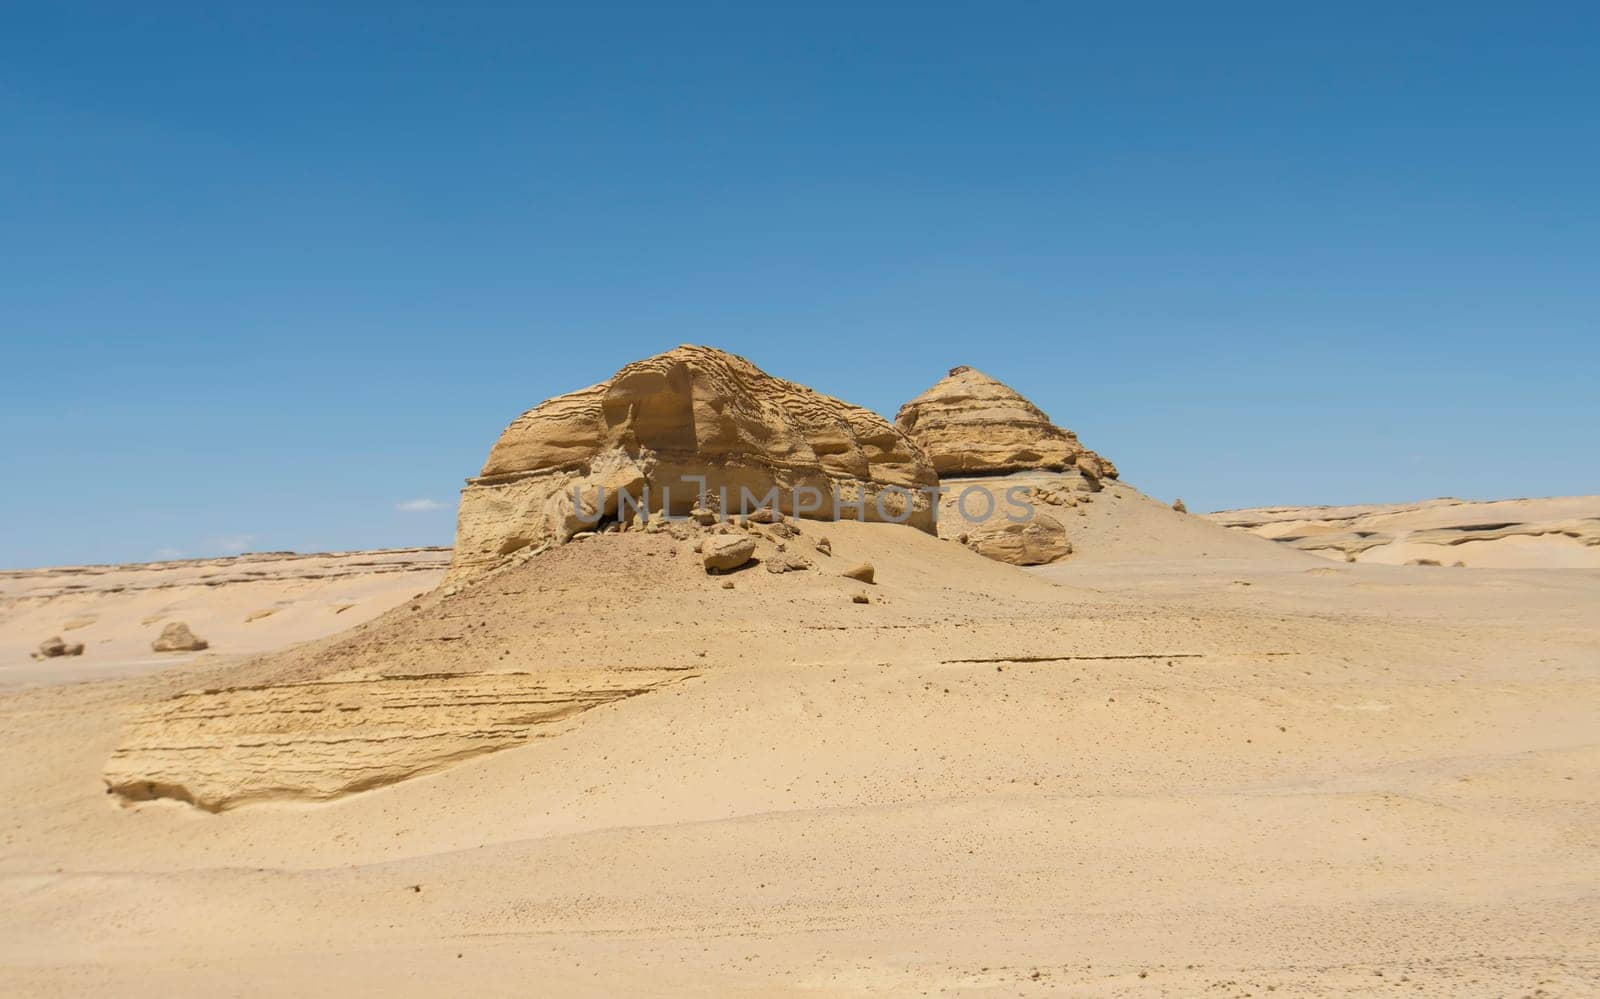 Barren desert landscape in hot climate with mountain rock formation by paulvinten